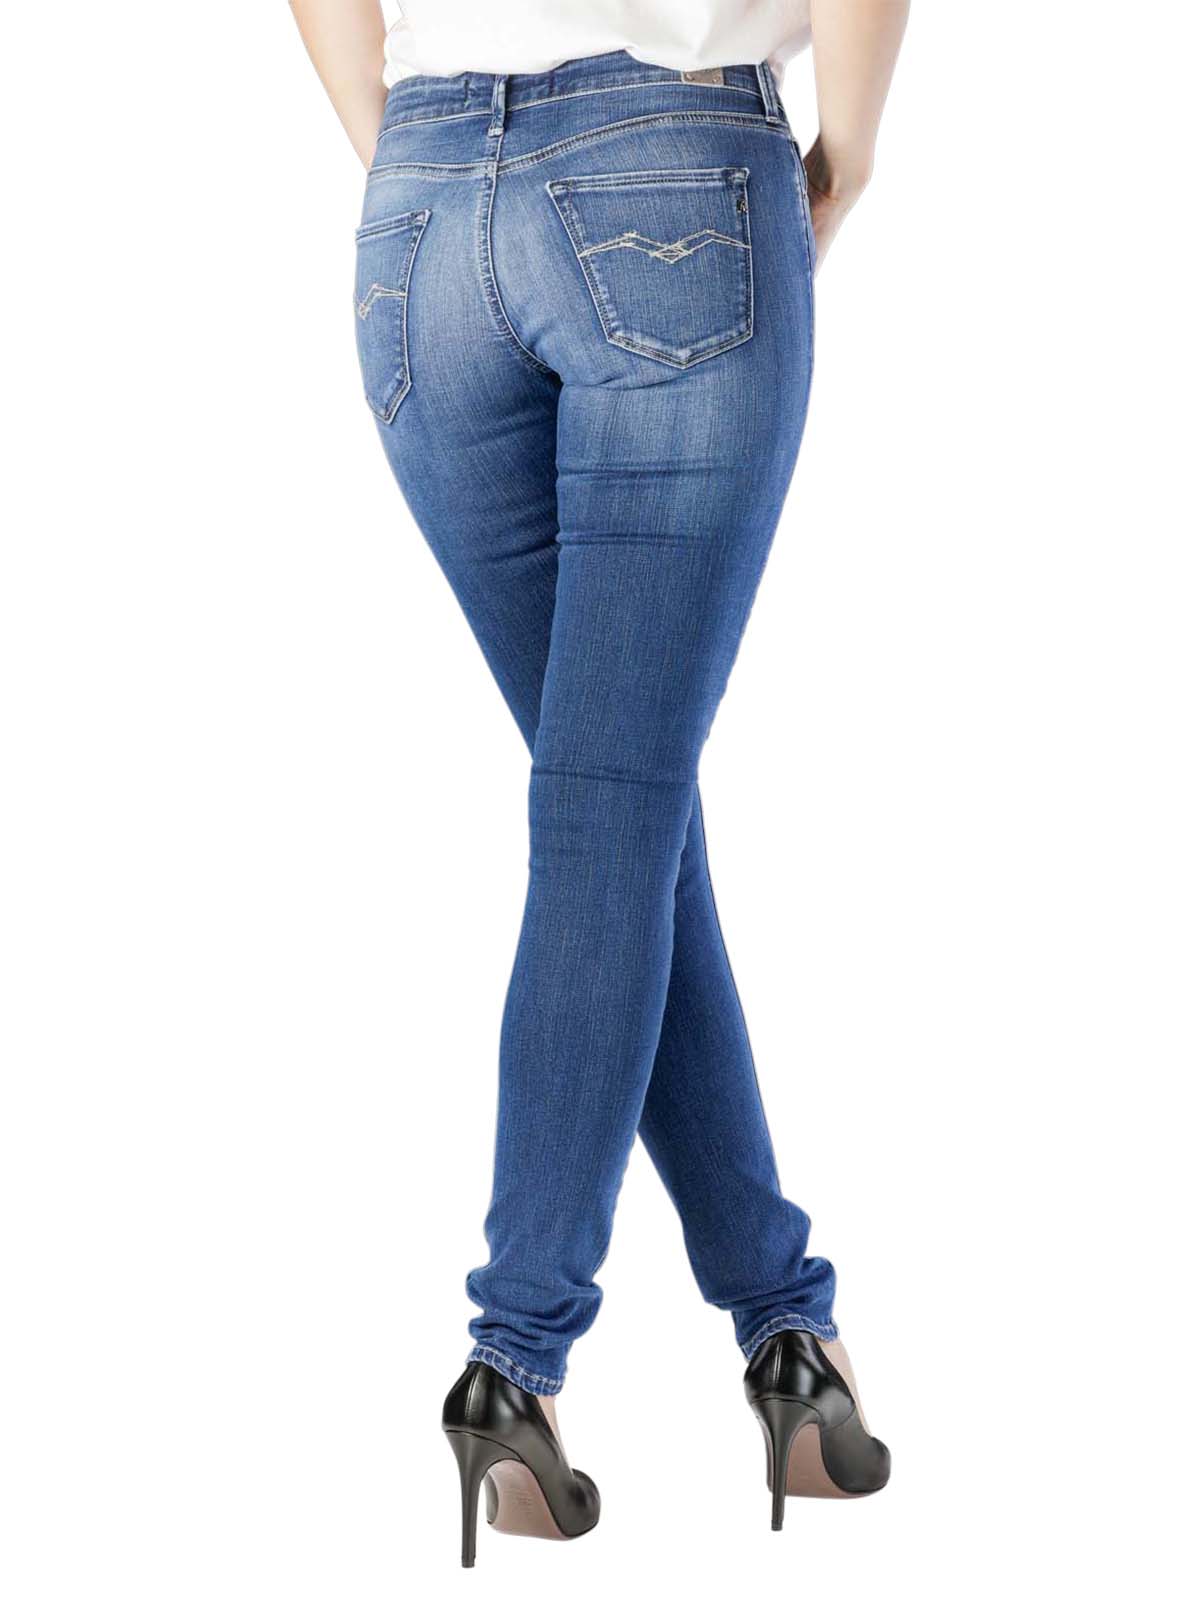 Merchandising Blauwe plek paradijs Replay Luz Jeans Skinny Fit A06 Replay Damen Jeans | Gratis Lieferung  BEBASIC.CH - SIMPLY LOOK GOOD